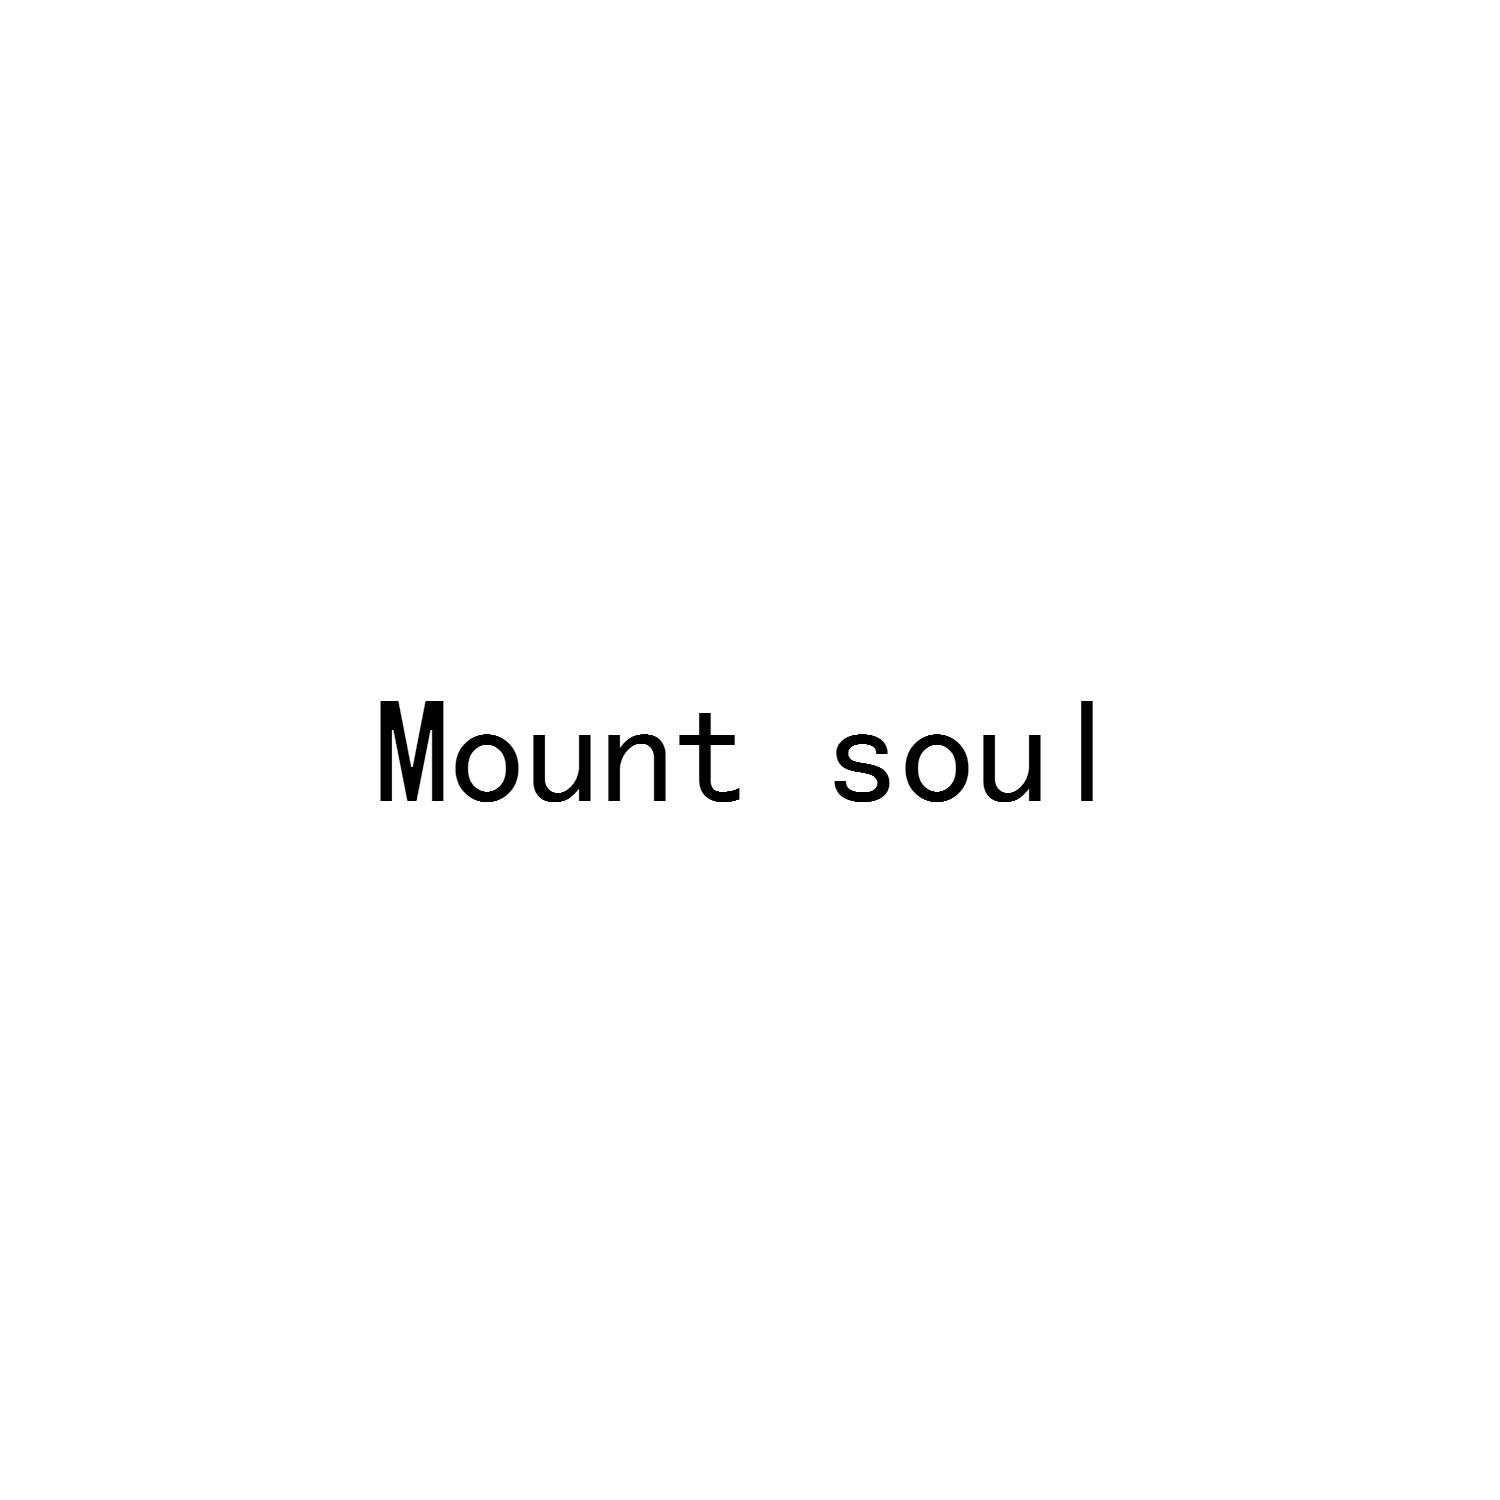 MOUNT SOUL